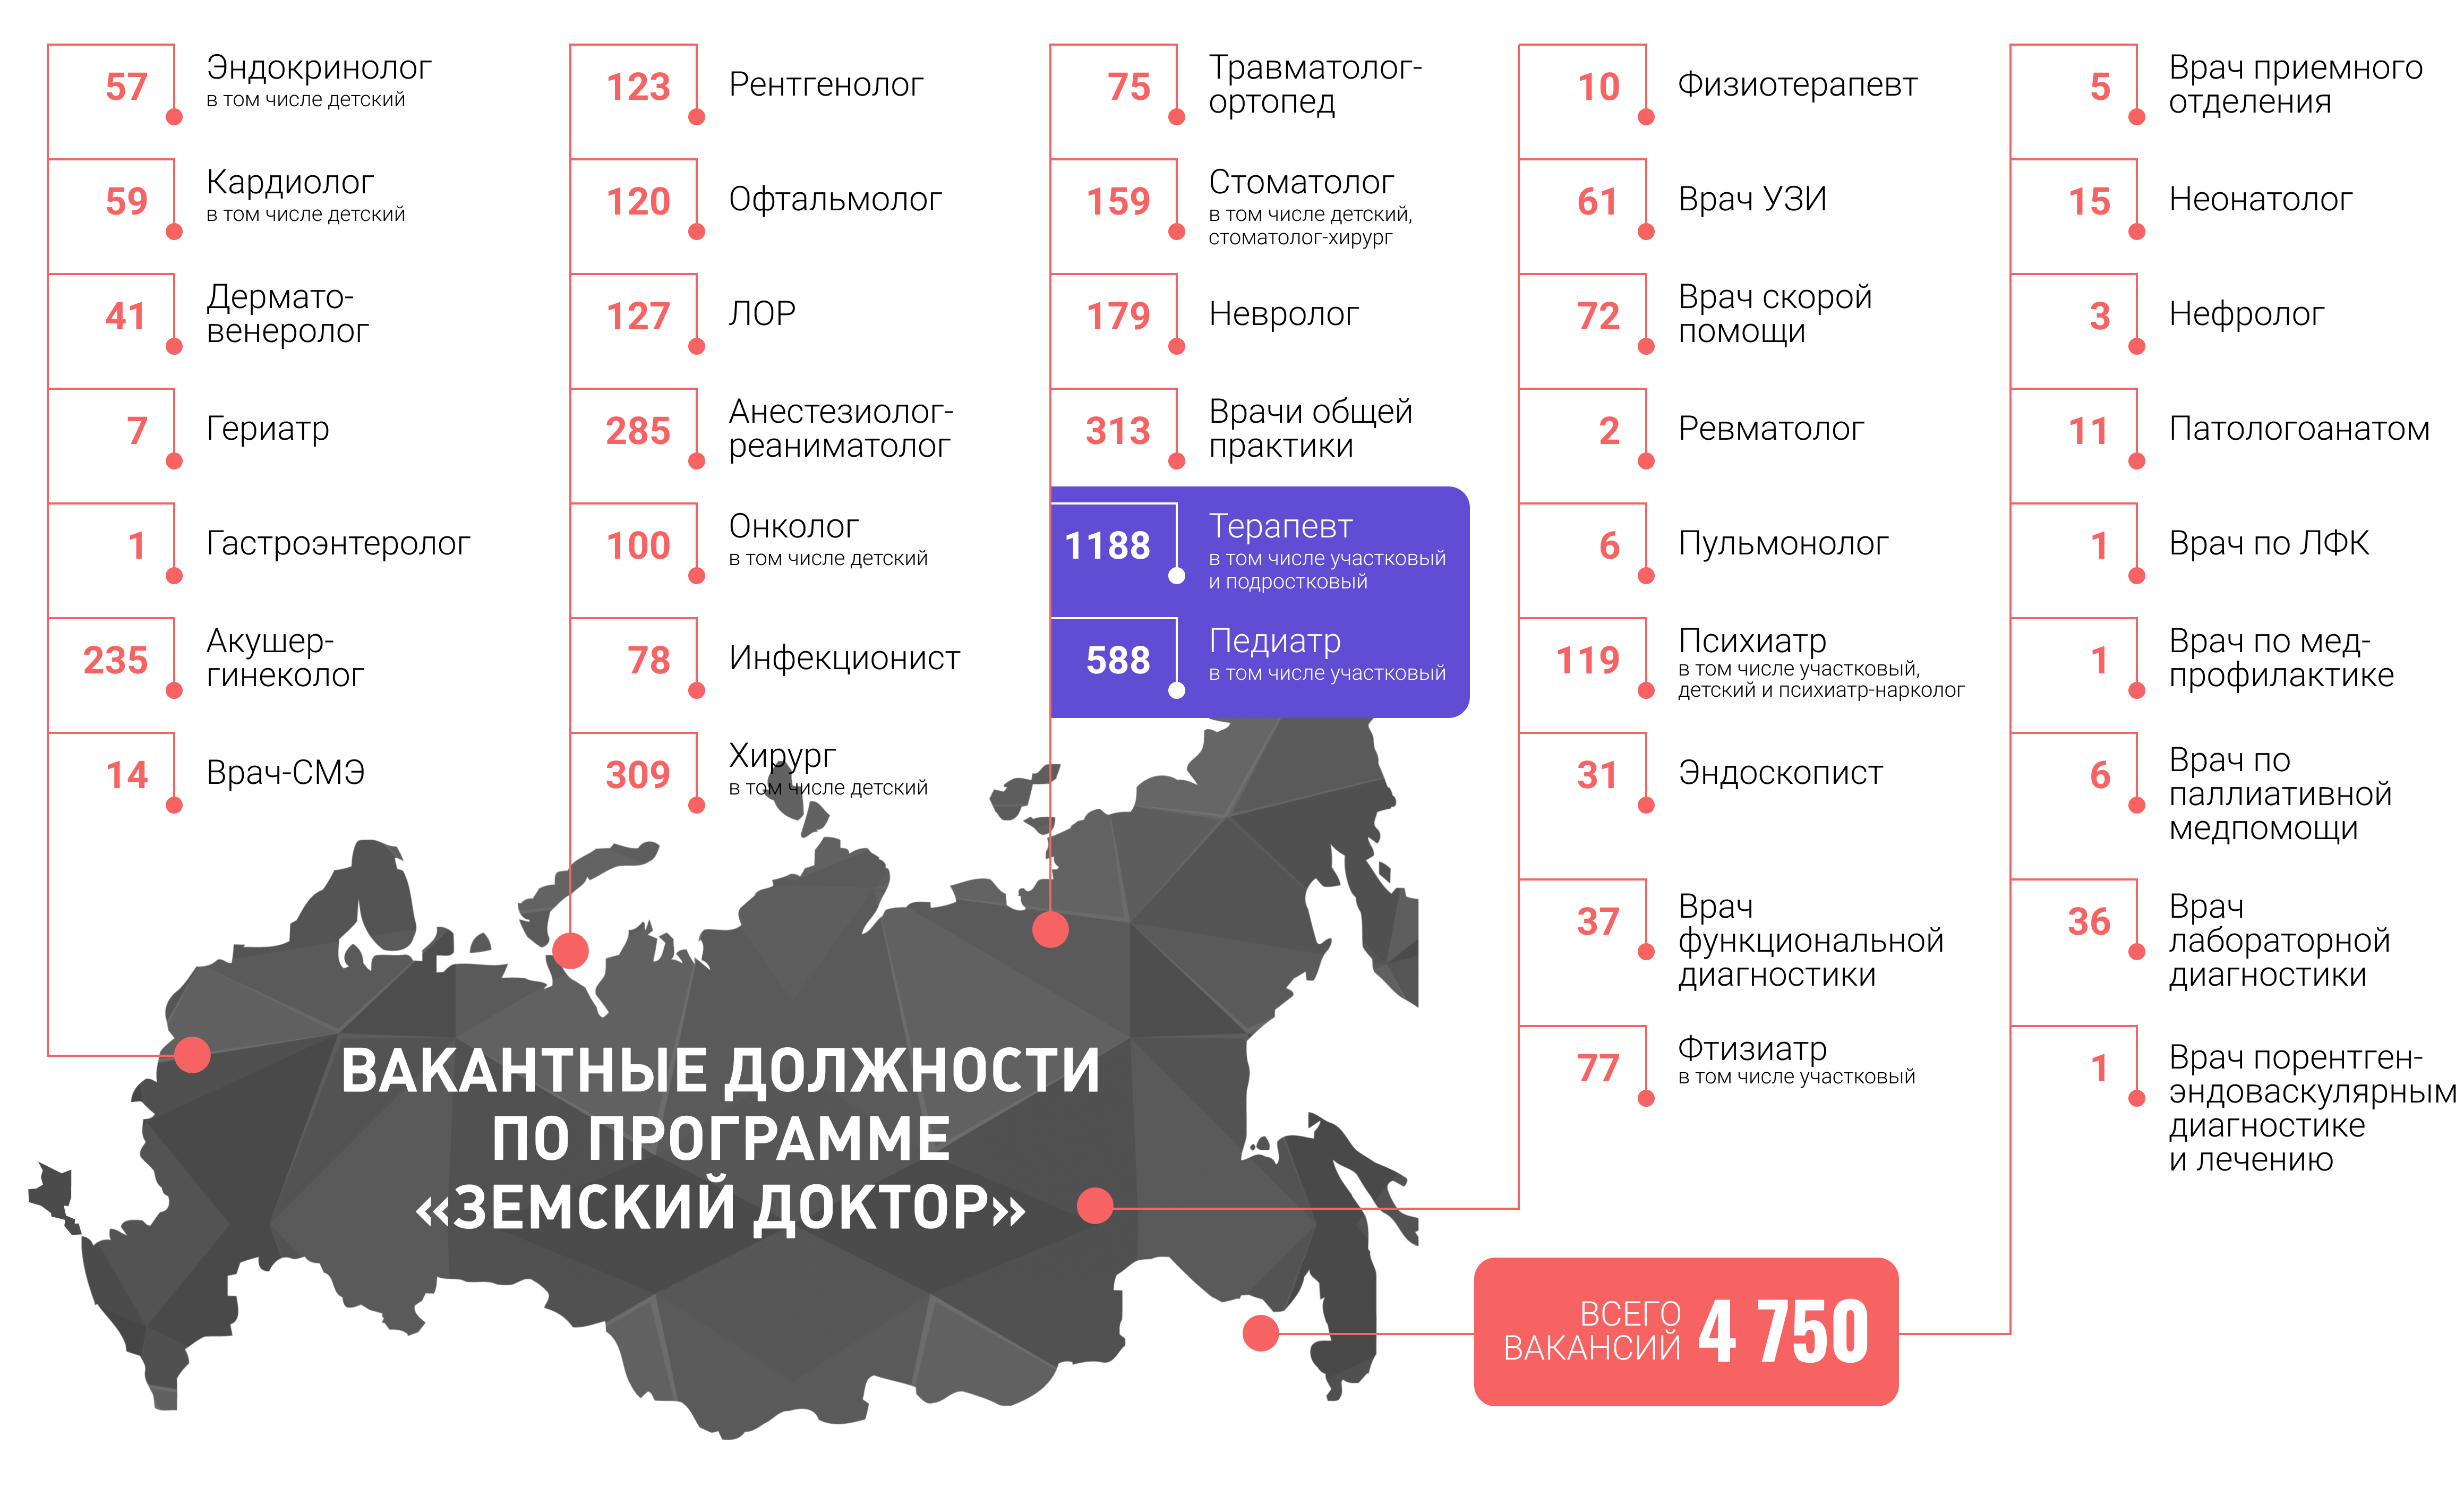 obnovlennaya_infografika_zemskij_doktor.png (1016 KB)